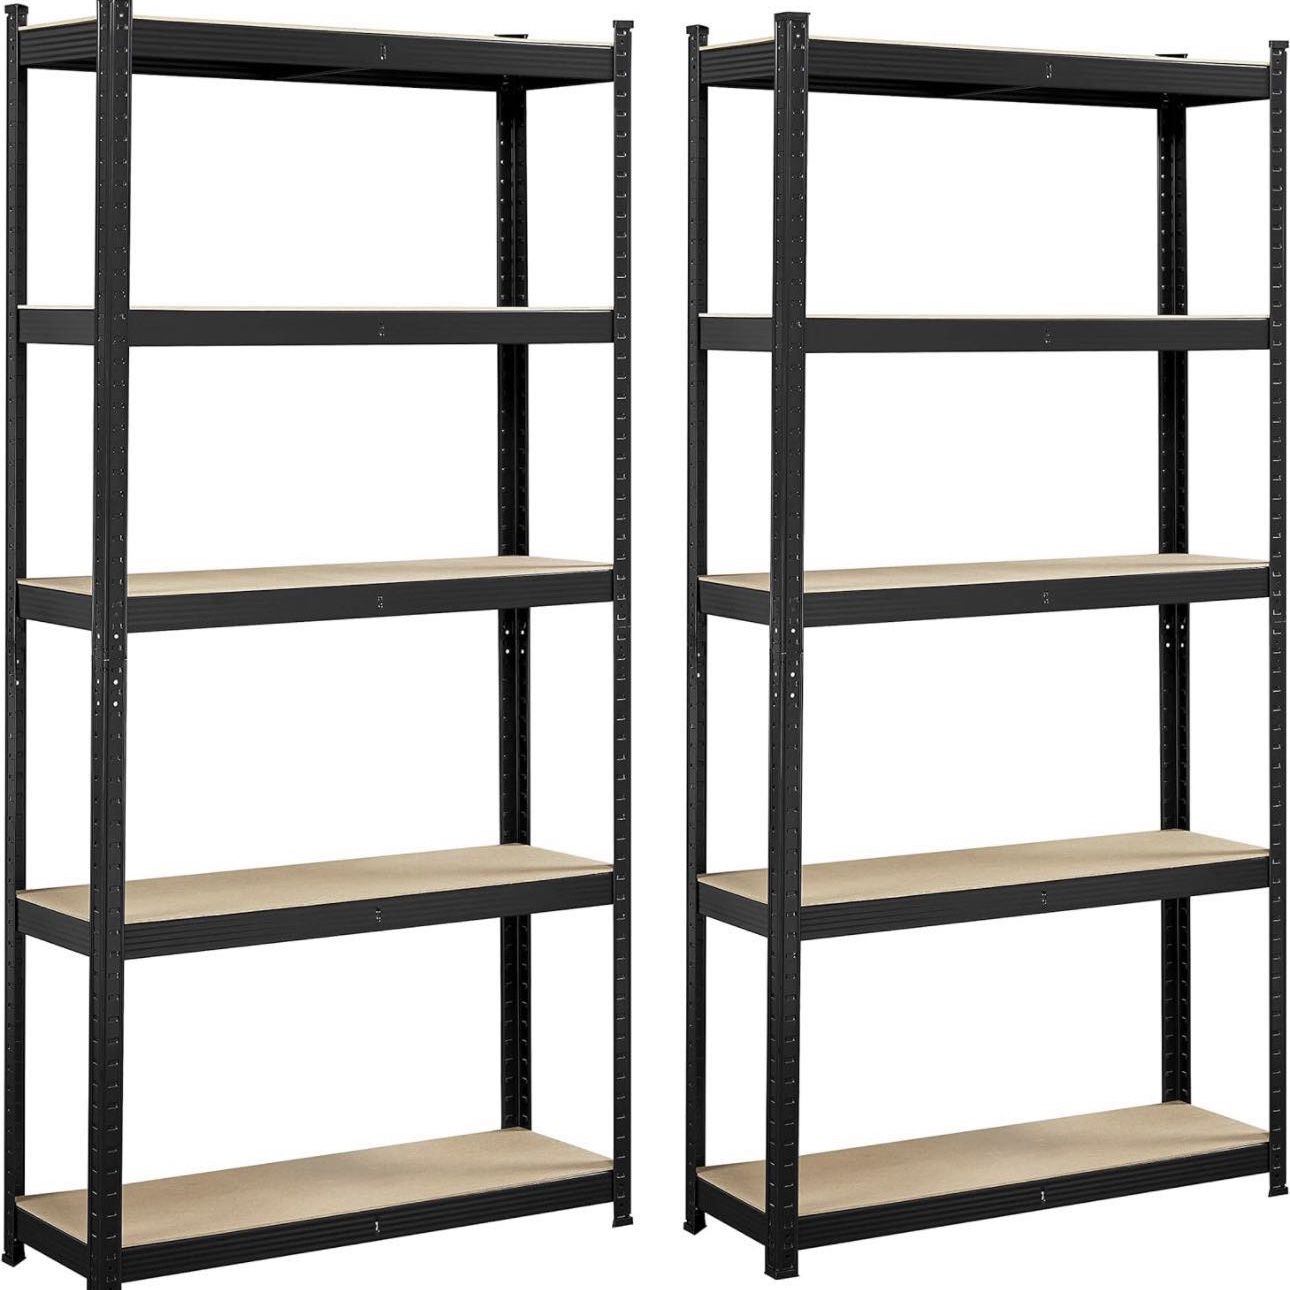 2PCS Storage Shelves 5 Tier Adjustable Metal Shelving Unit Utility Shelves Garage Storage Racks for Warehouse Garage Pantry Kitchen- Black, 35.5 x 12 